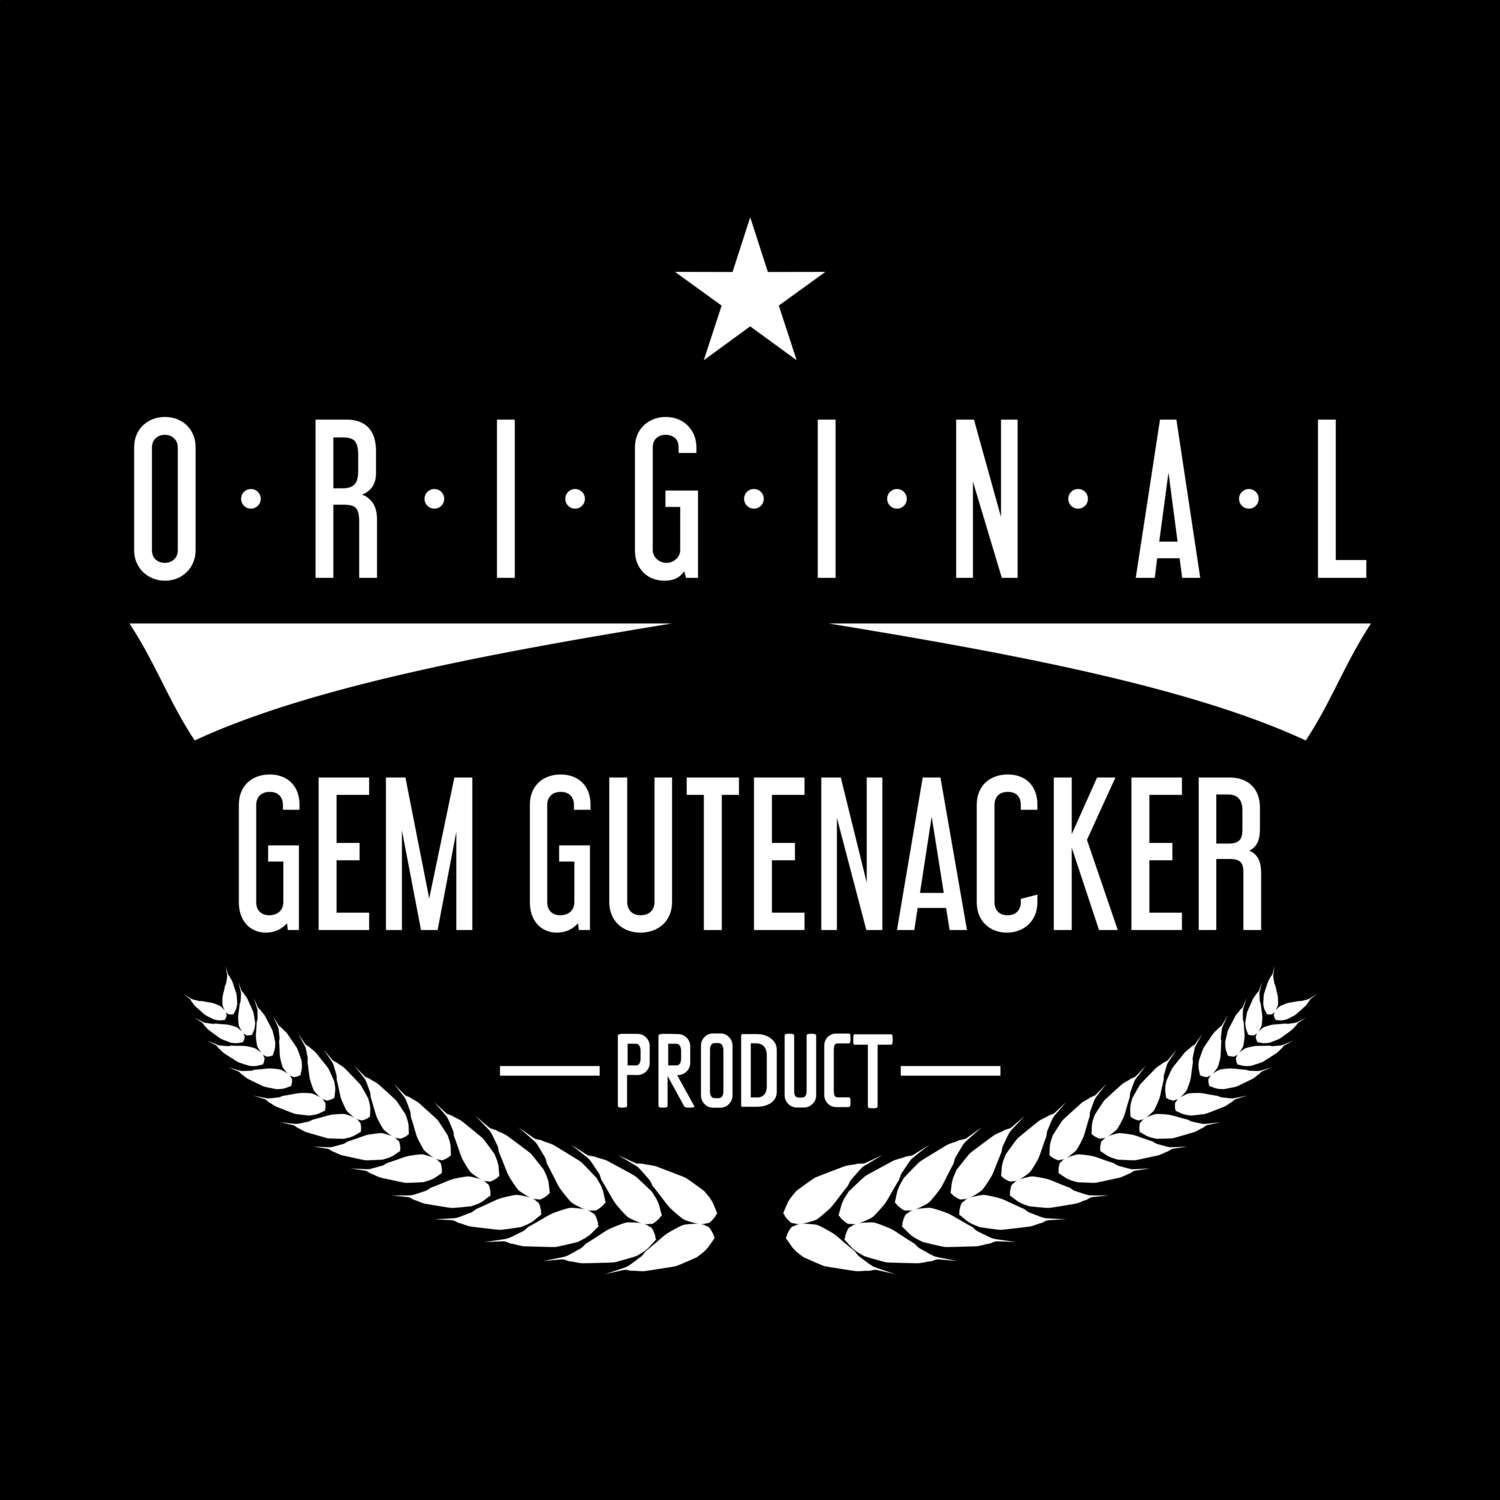 Gem Gutenacker T-Shirt »Original Product«